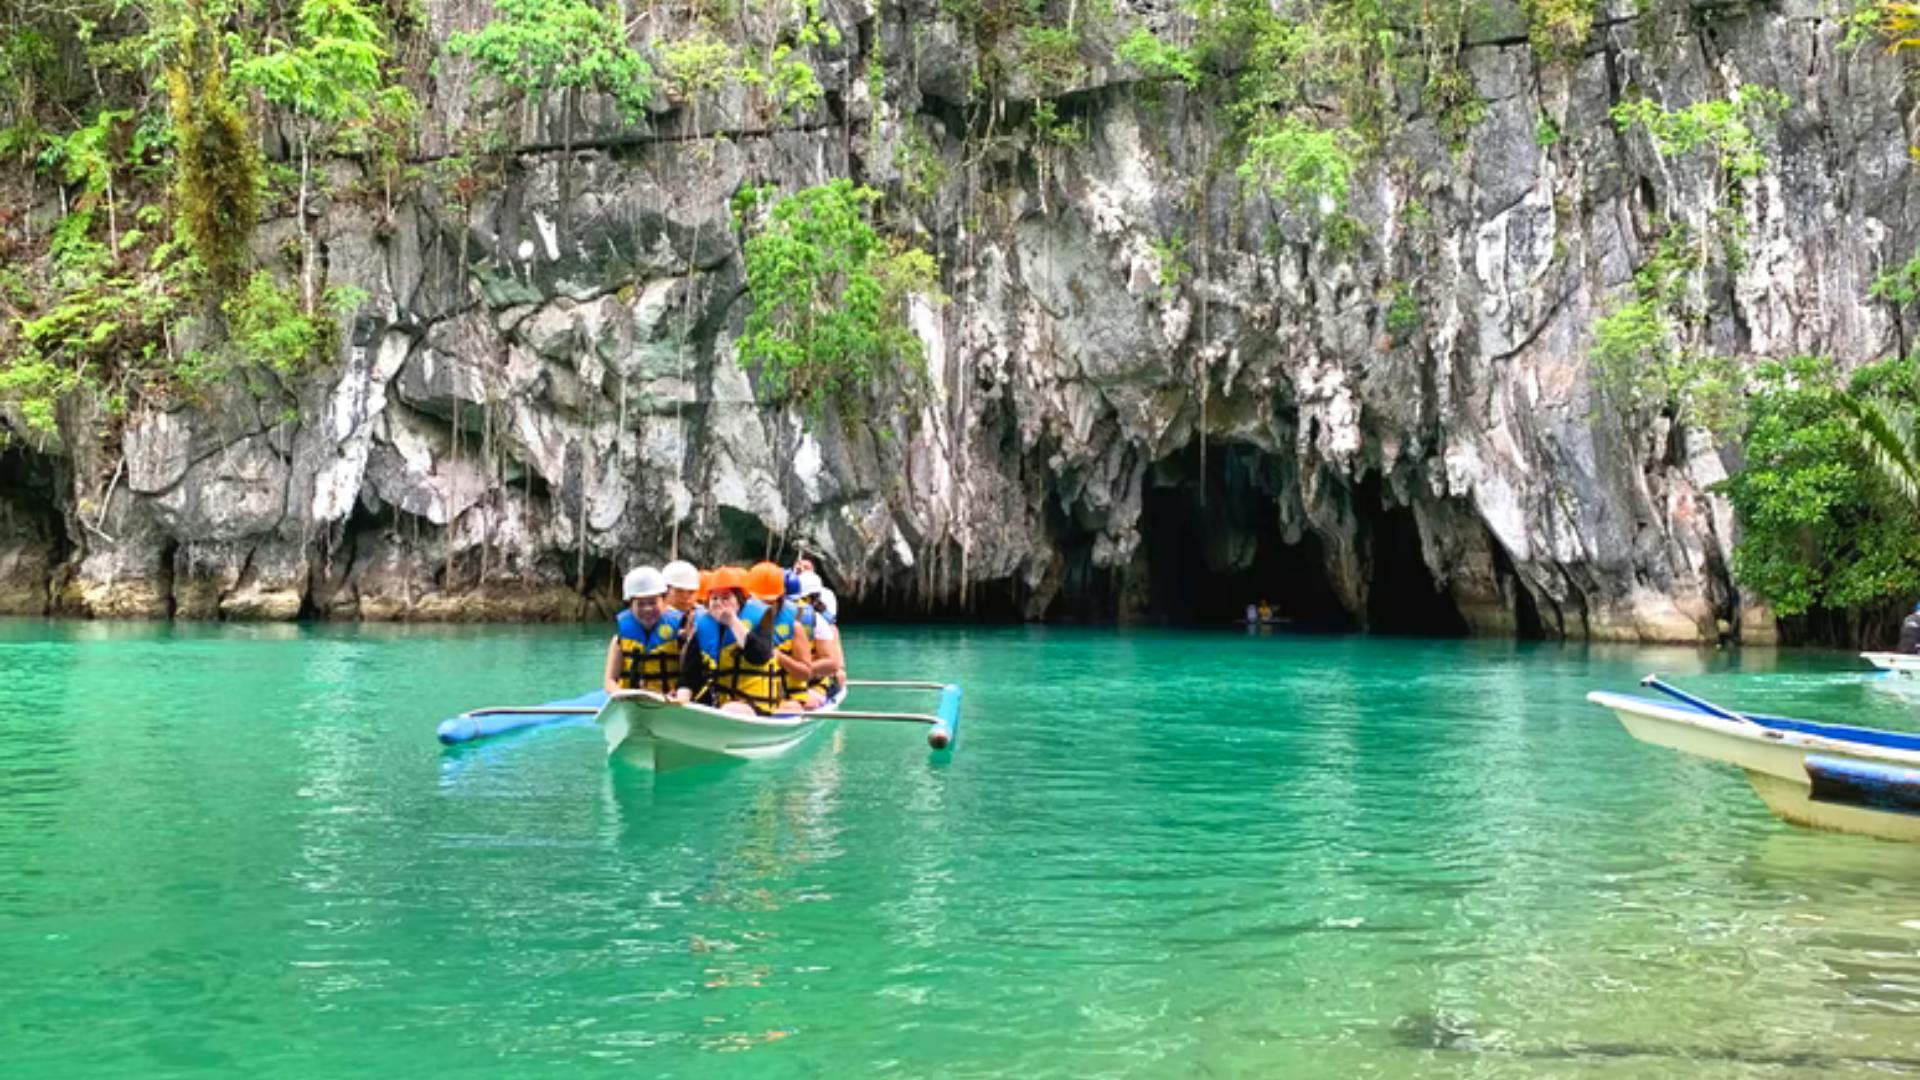 4-Day Palawan Philippines Virtual Tour | El Nido, Coron, Puerto Princesa, Diving Spots - day 3